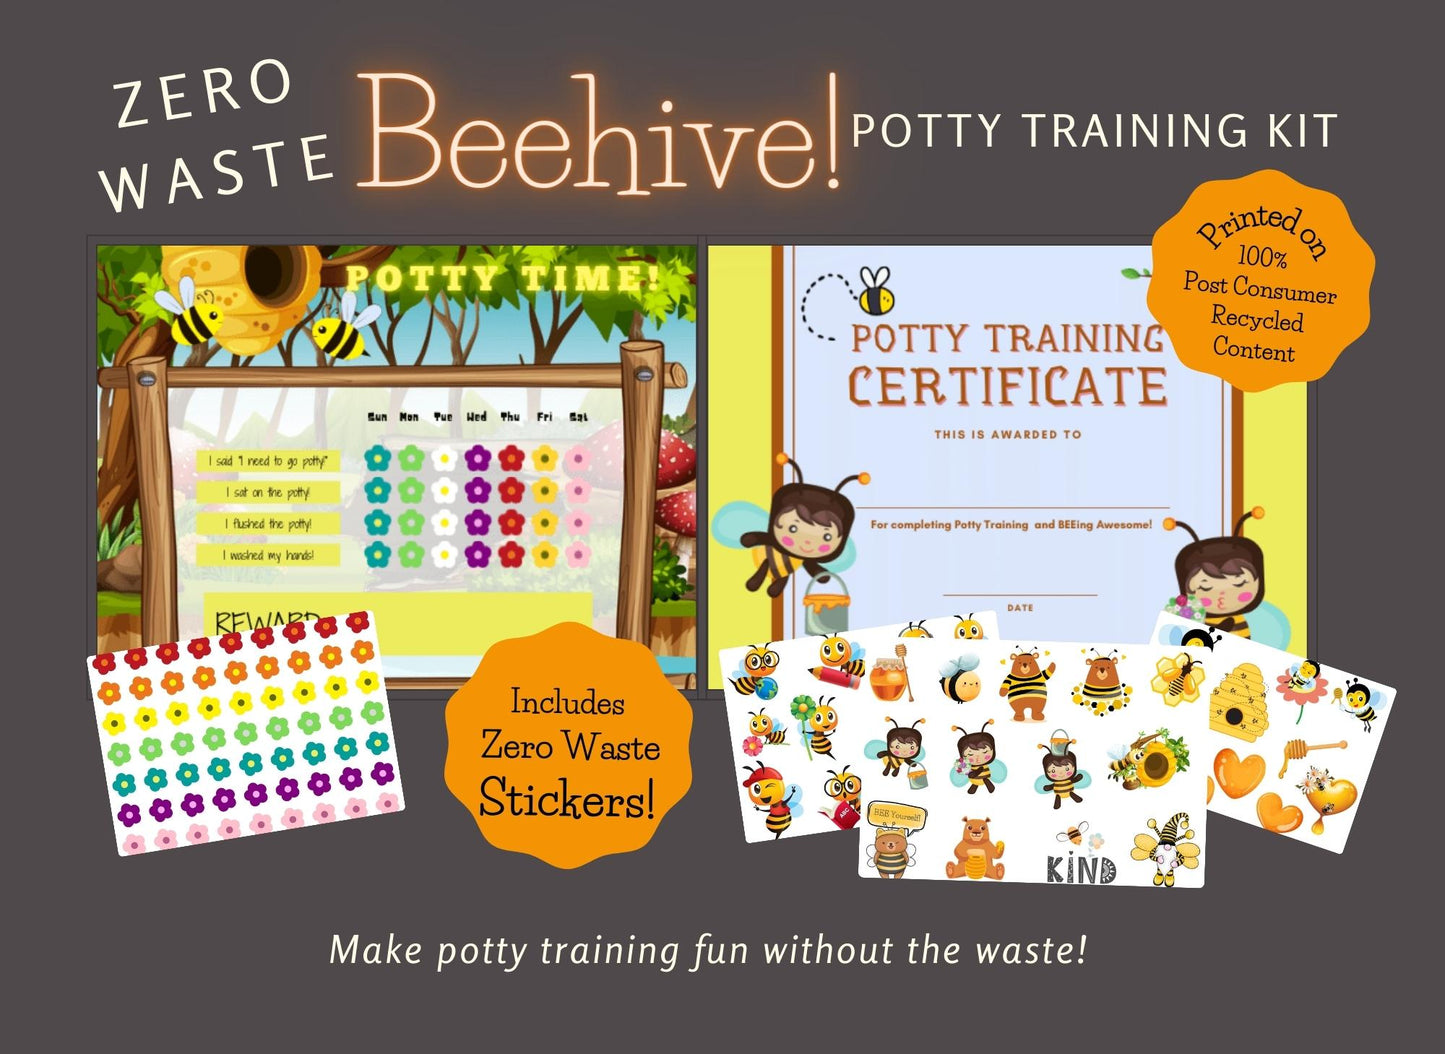 Beehive Potty Training Kit with Zero Waste Stickers